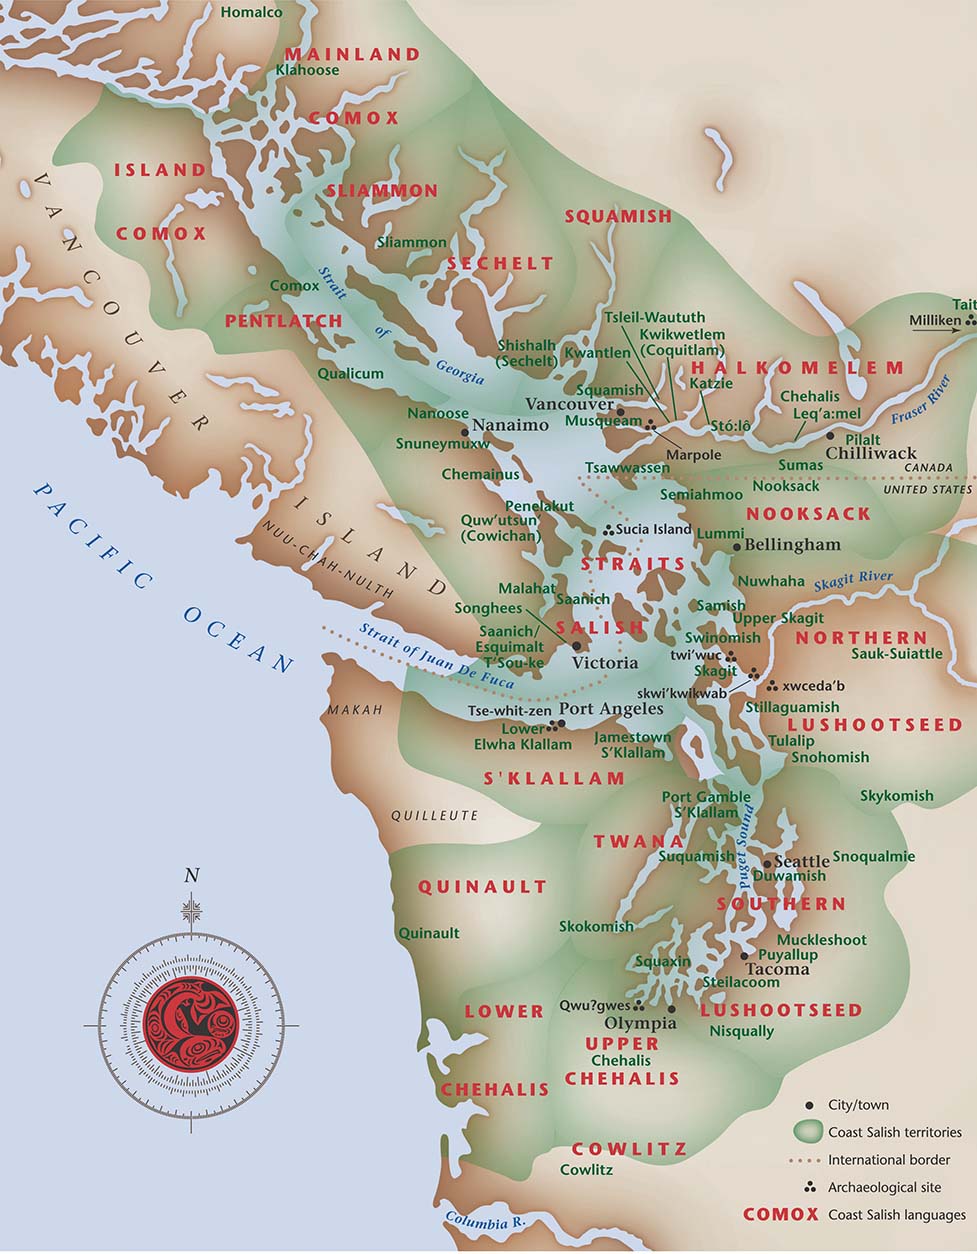 Salish Sea and tribal nations. Map source: Seattle University